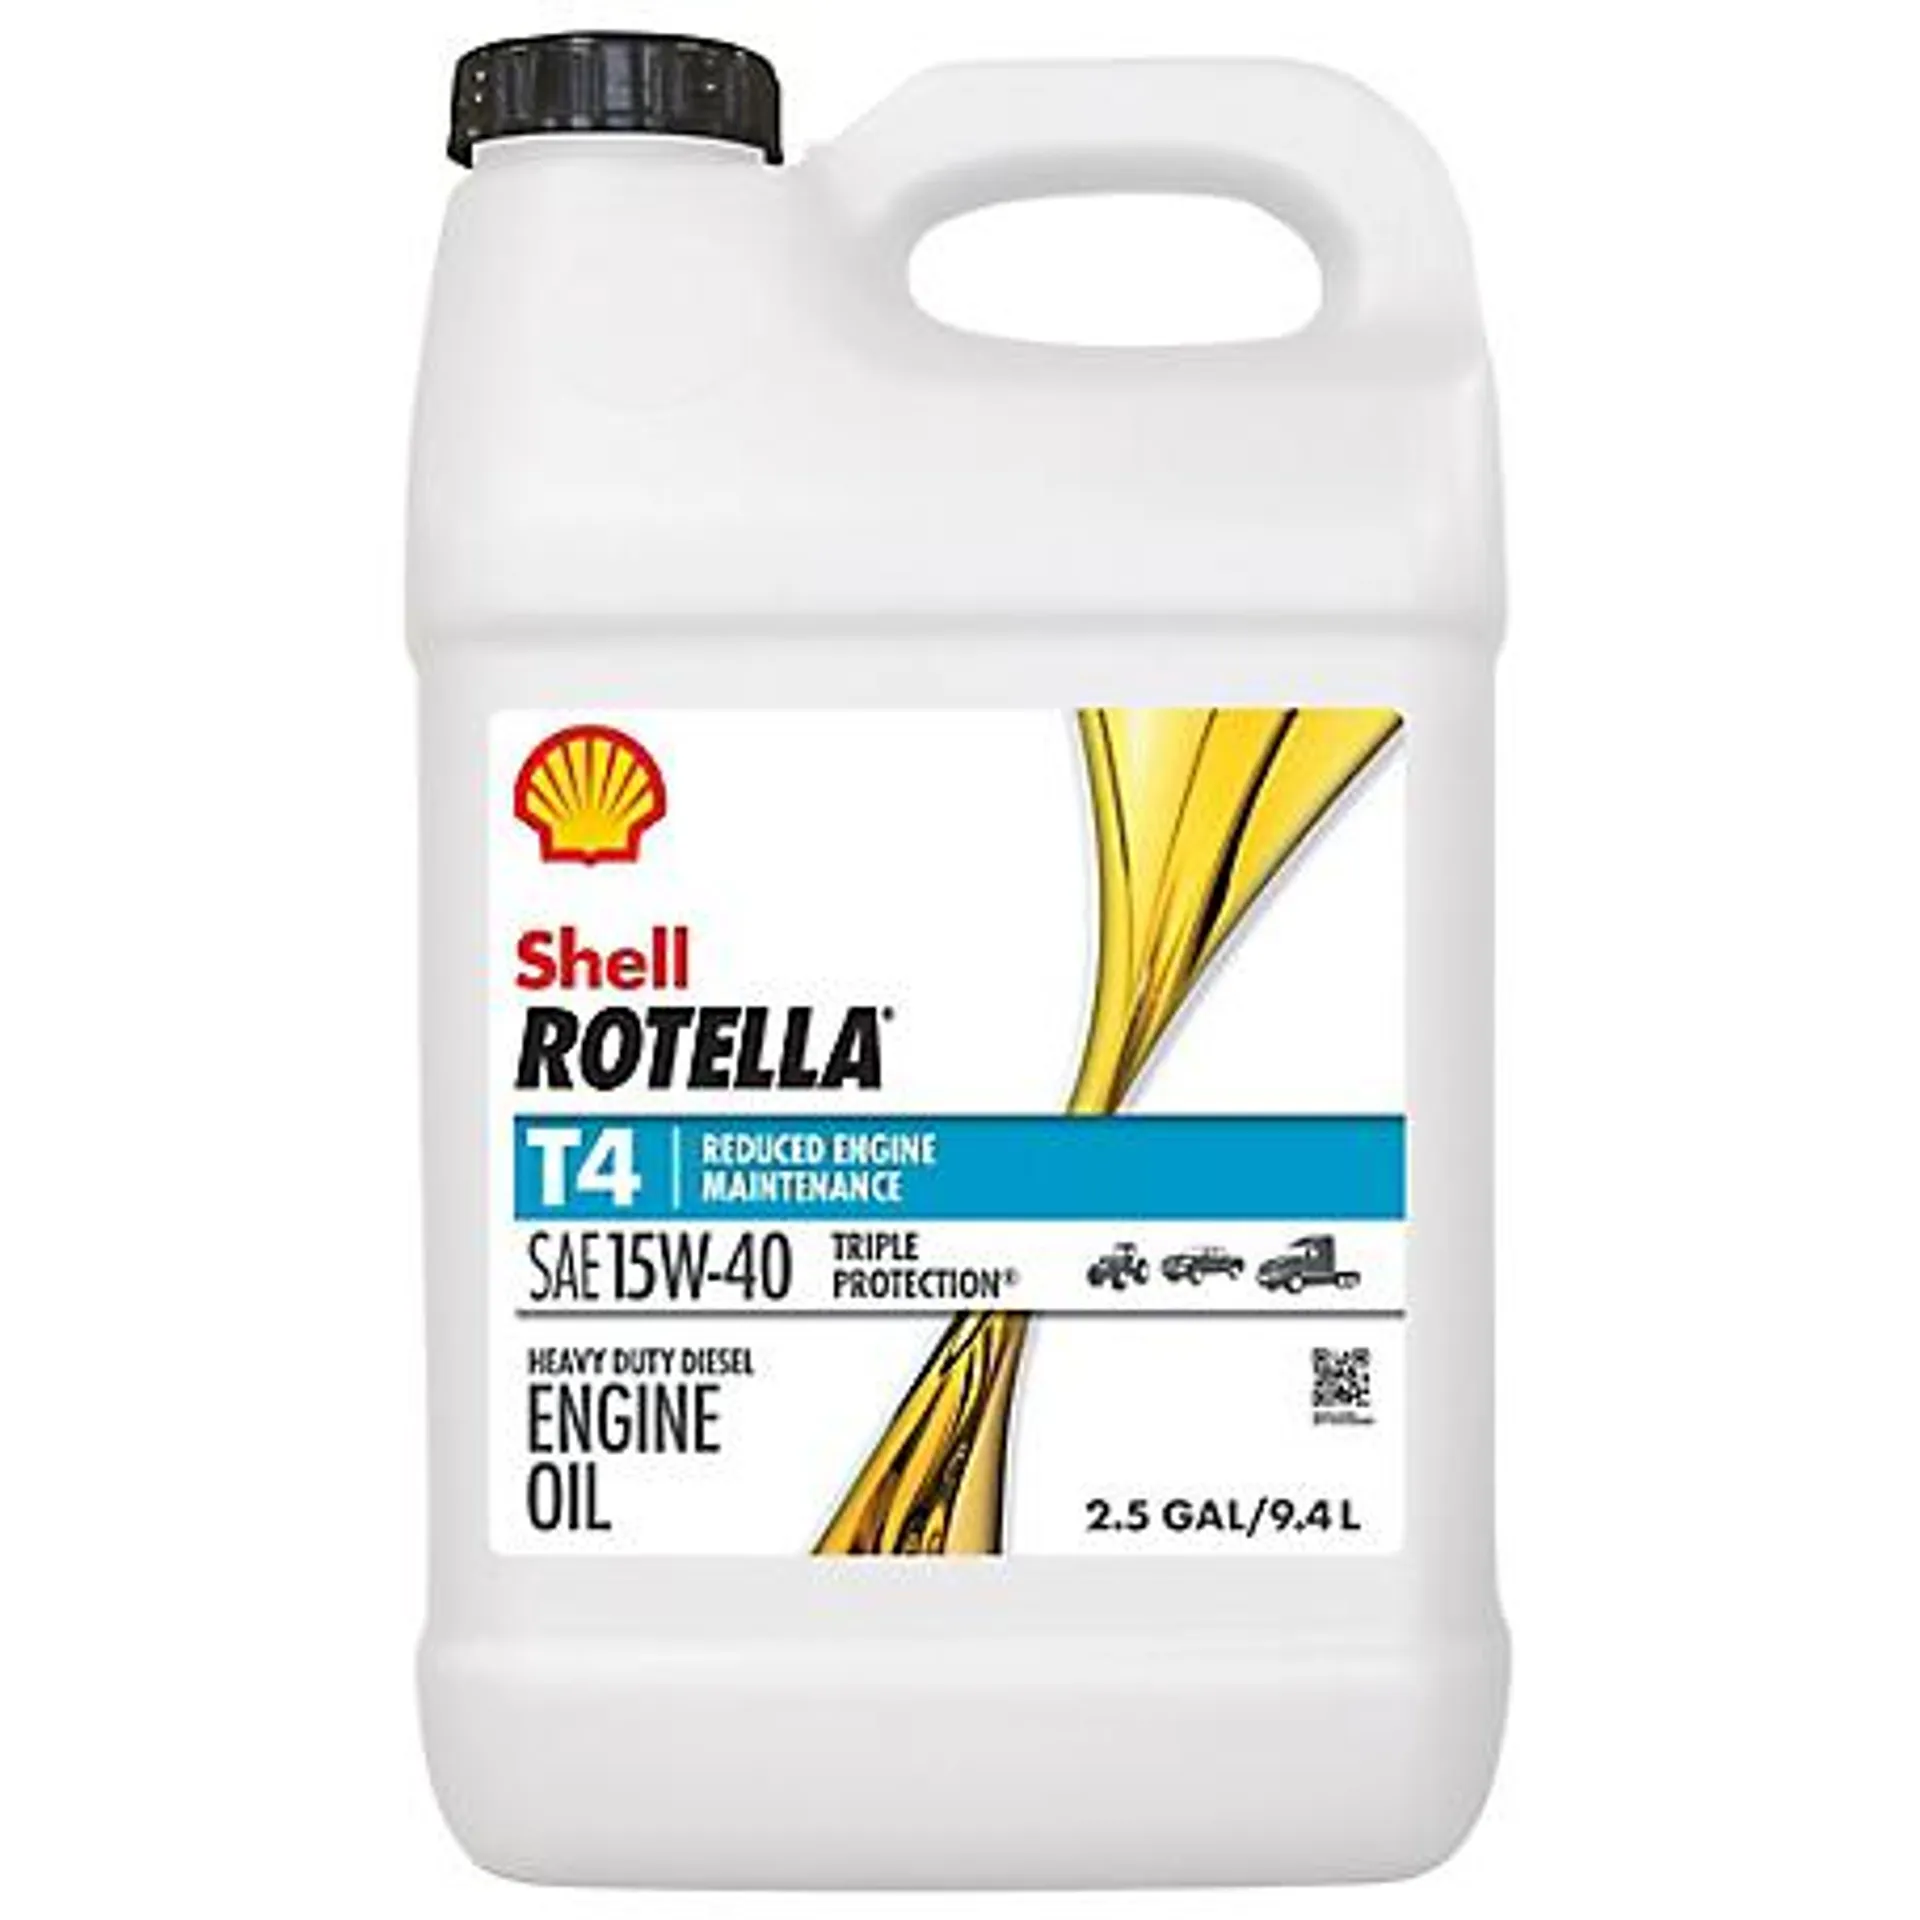 Shell Rotella T4 SAE 15W40 Triple Protection Heavy Duty Motor Oil 2.5 gallon